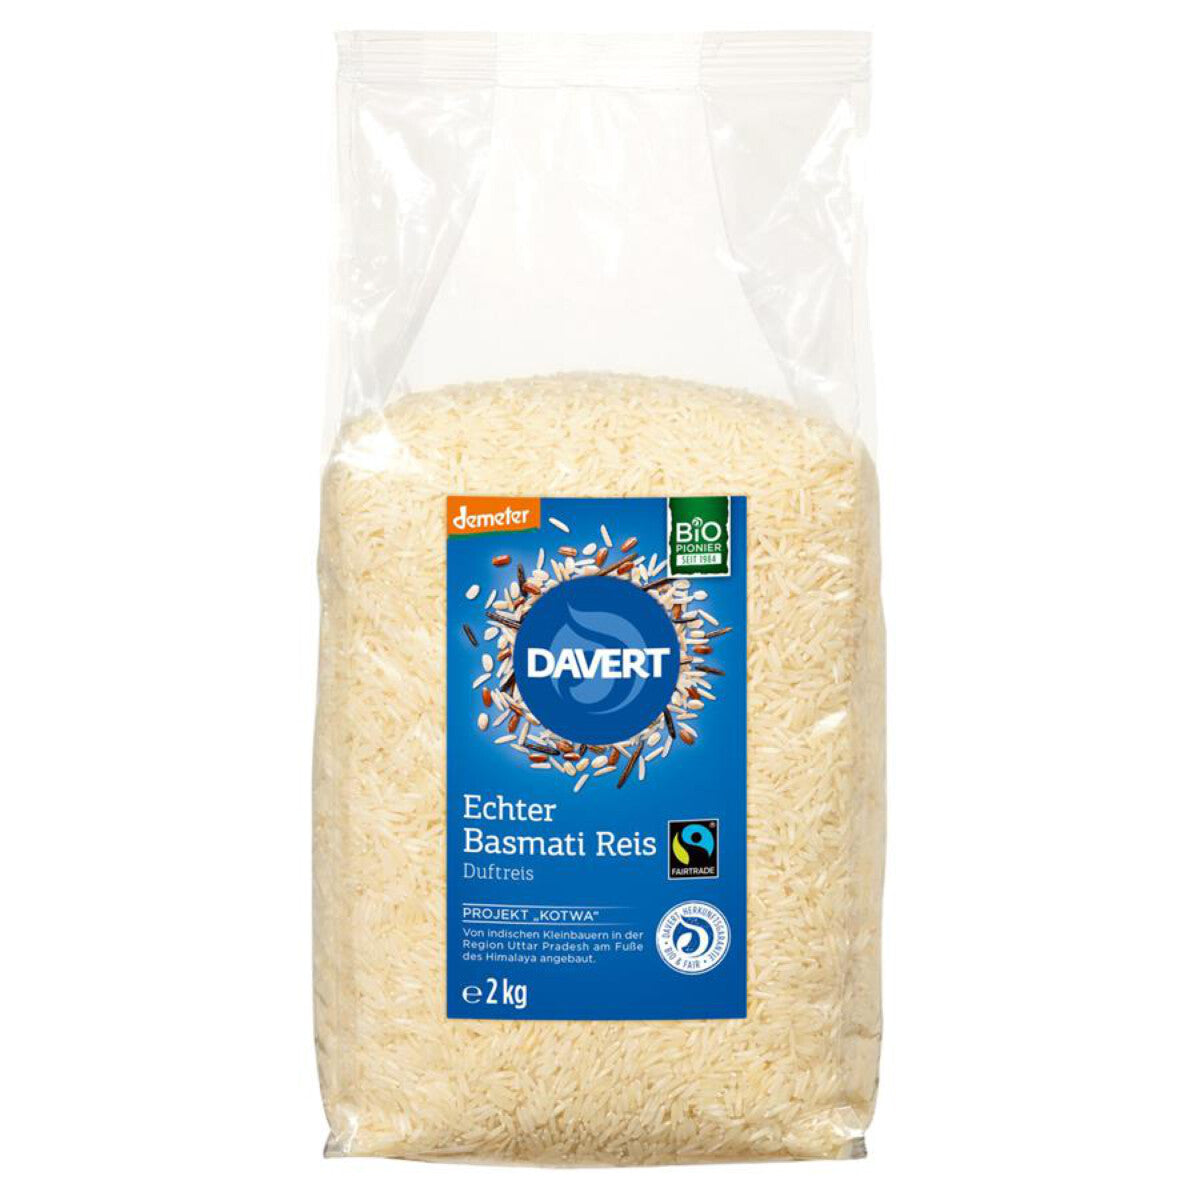 DAVERT Basmati-Reis weiß echt - 2 kg